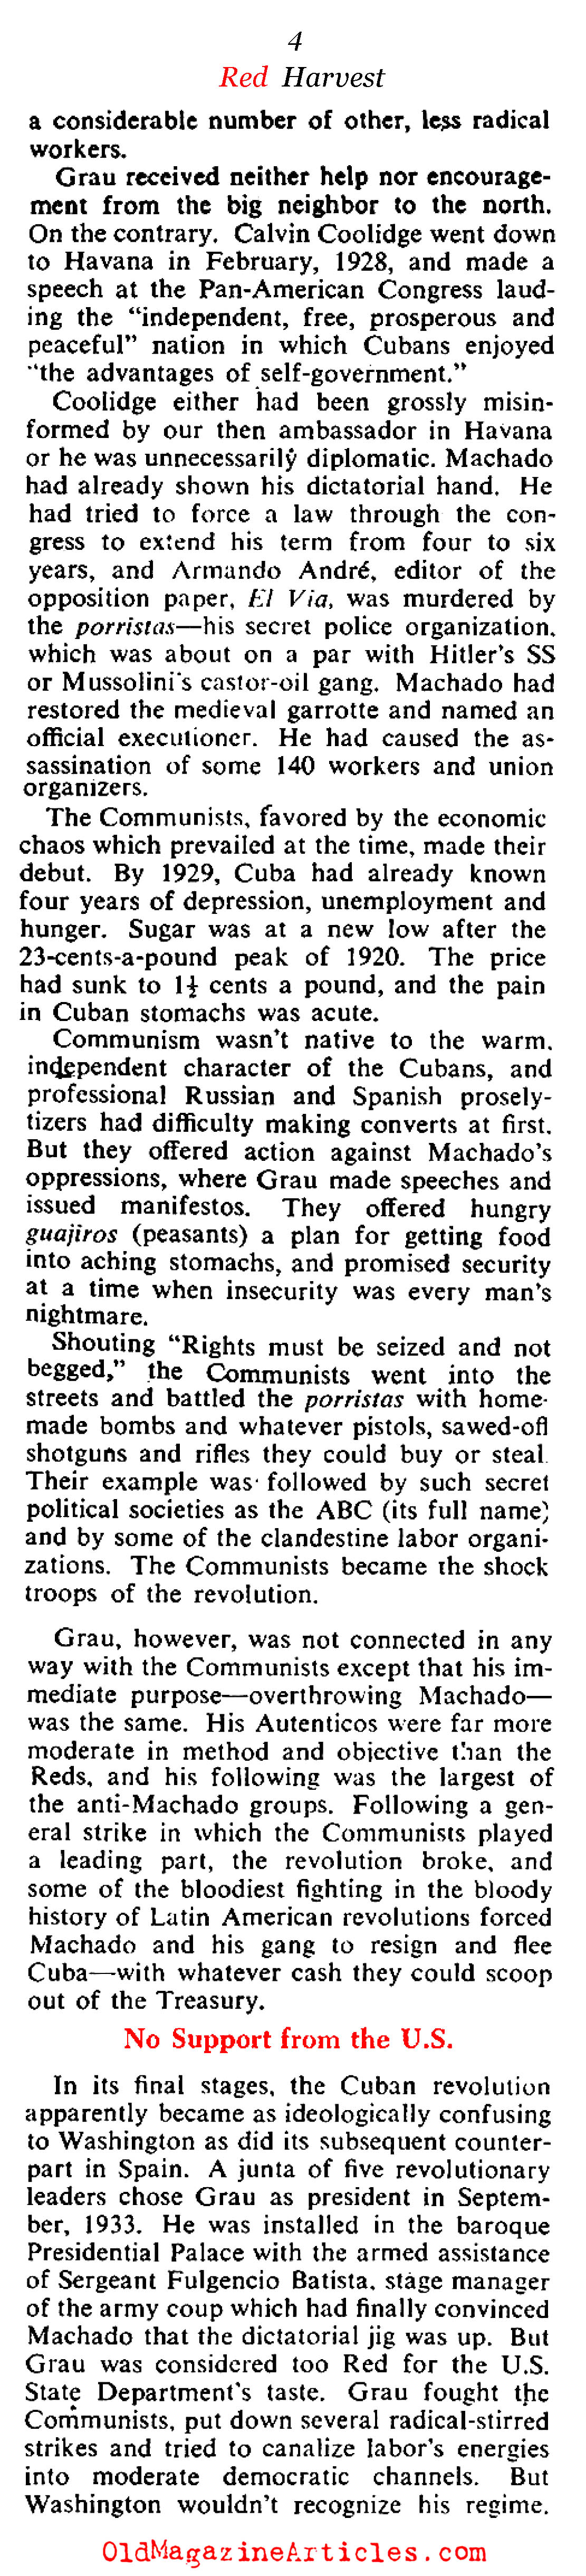 Big Trouble in Little Cuba (Collier's Magazine, 1945)